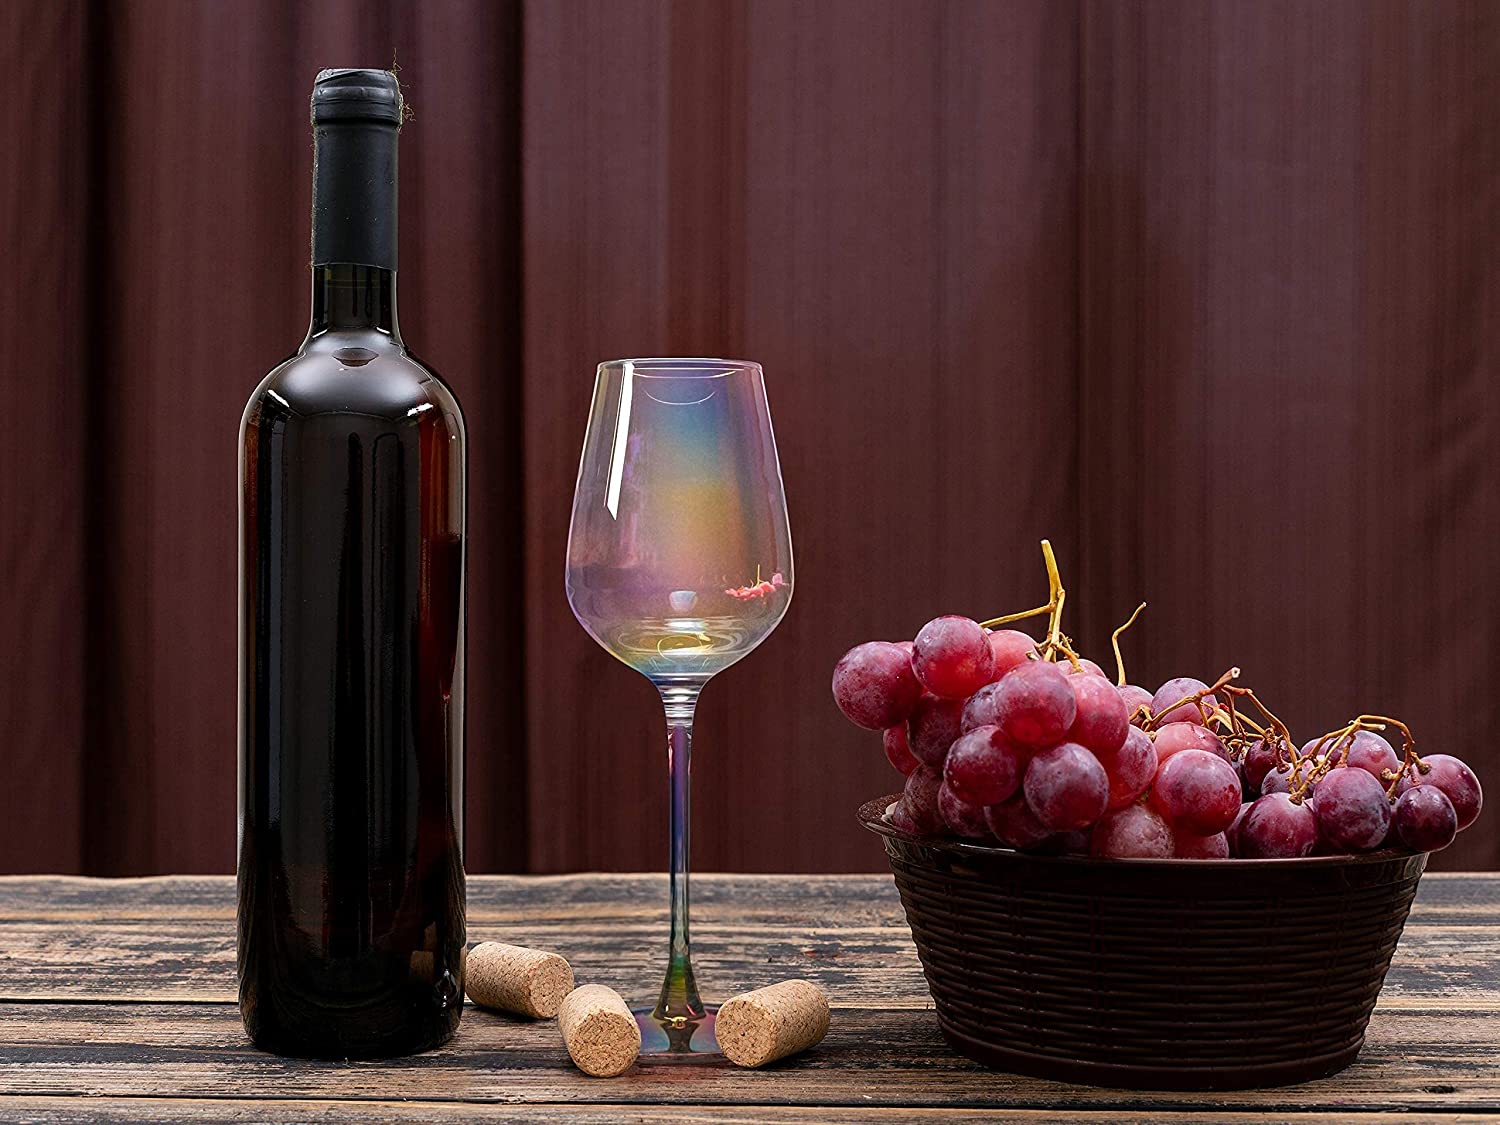 Iridescent Hammered Balloon Wine Glass – Adelina Social Goods